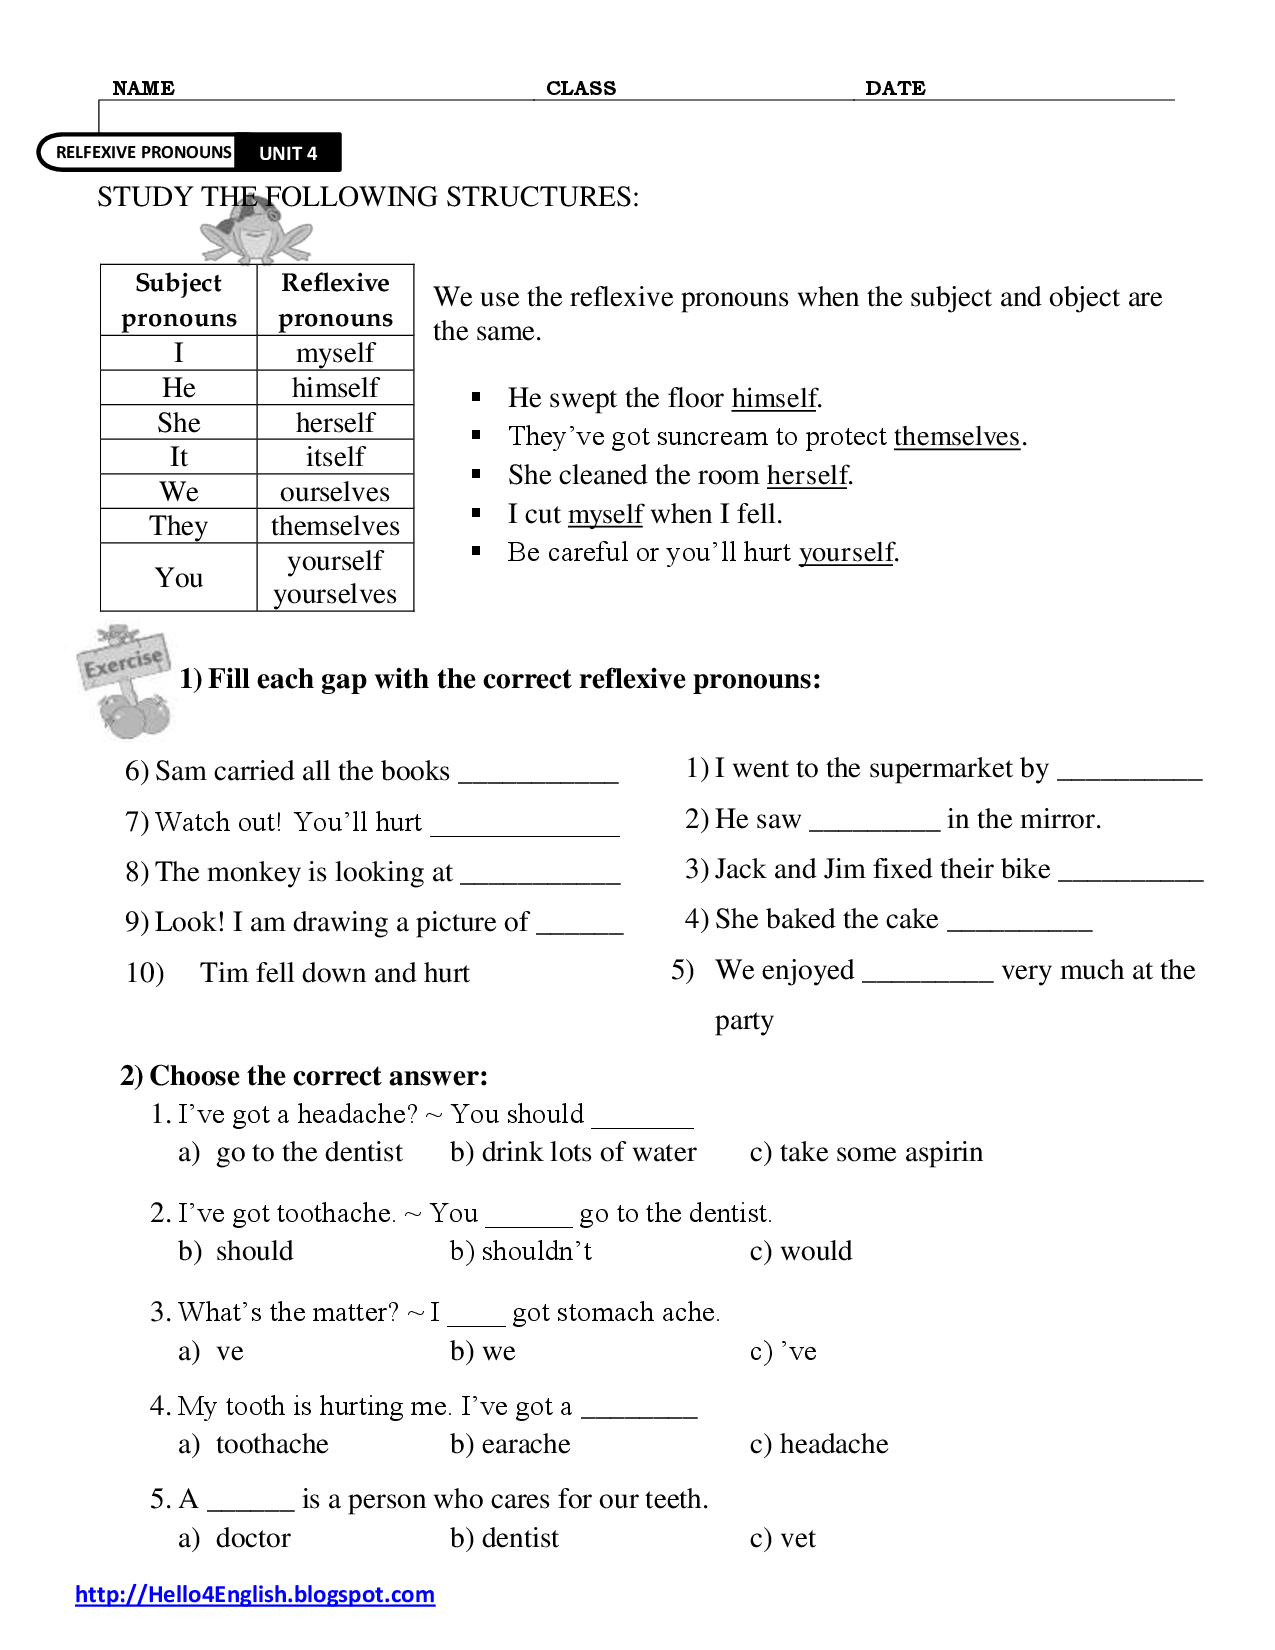 18-reflexive-pronouns-in-spanish-worksheet-worksheeto